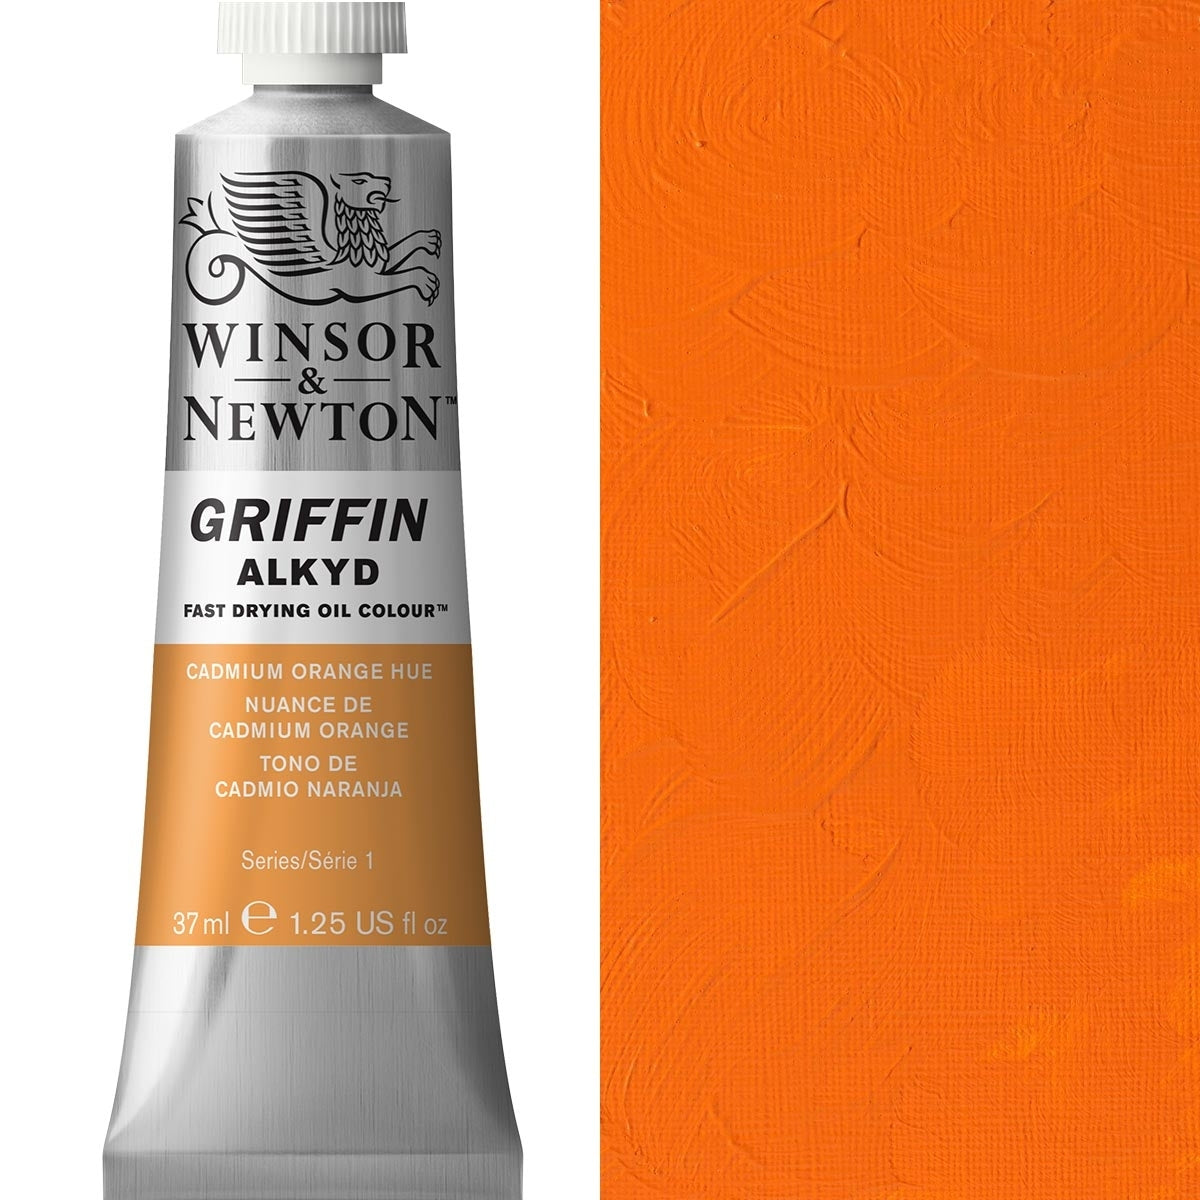 Winsor and Newton - Griffin ALKYD Oil Colour - 37ml - Cadmium Orange Hue